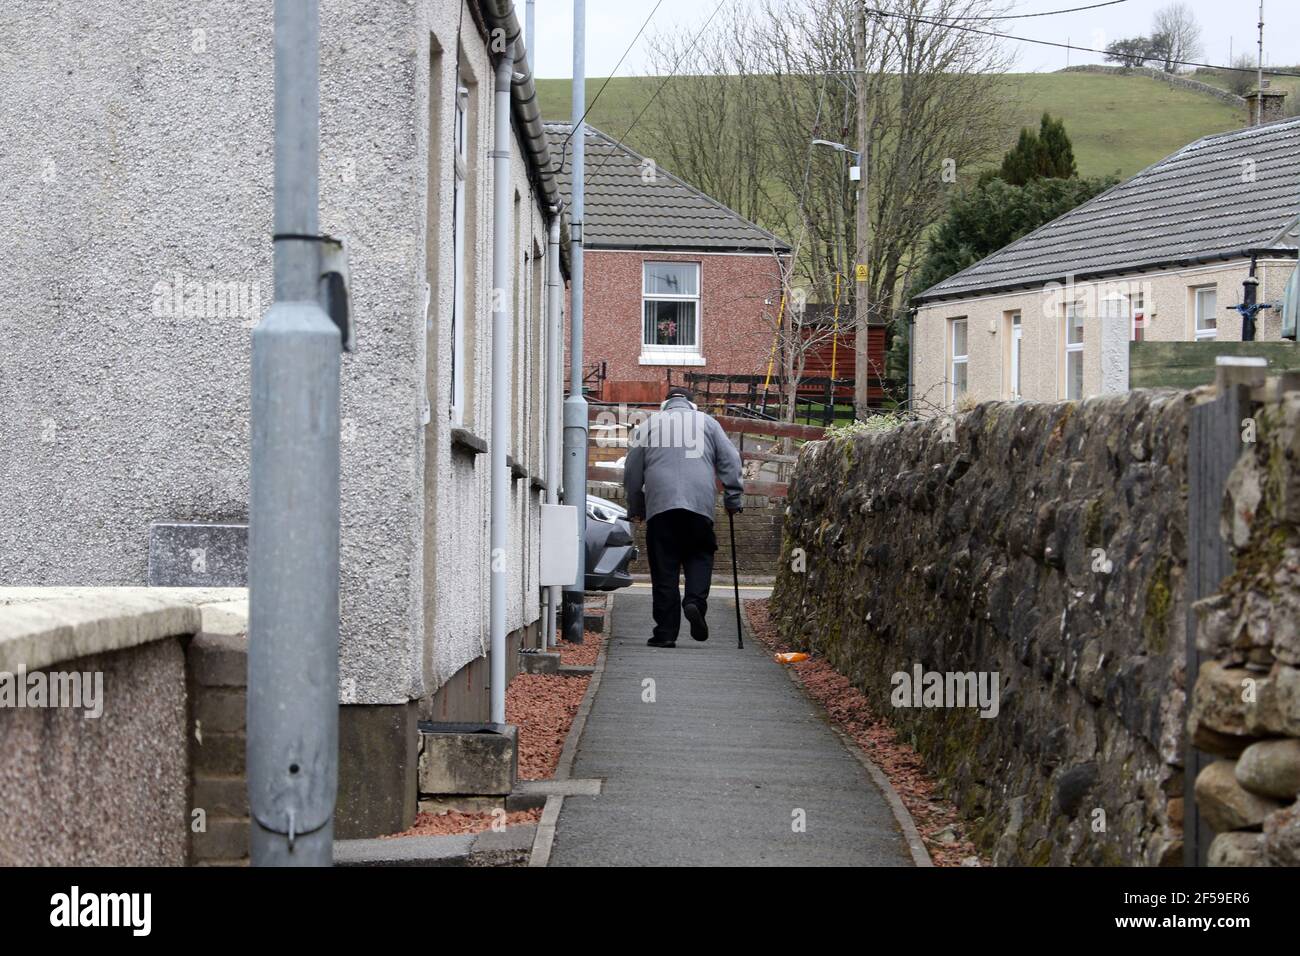 Sanquhar, Dumfries & Galloway, Scotland, UK. 22 Mar 2021. Old man with walking stick walking up passage way. Heading home Stock Photo